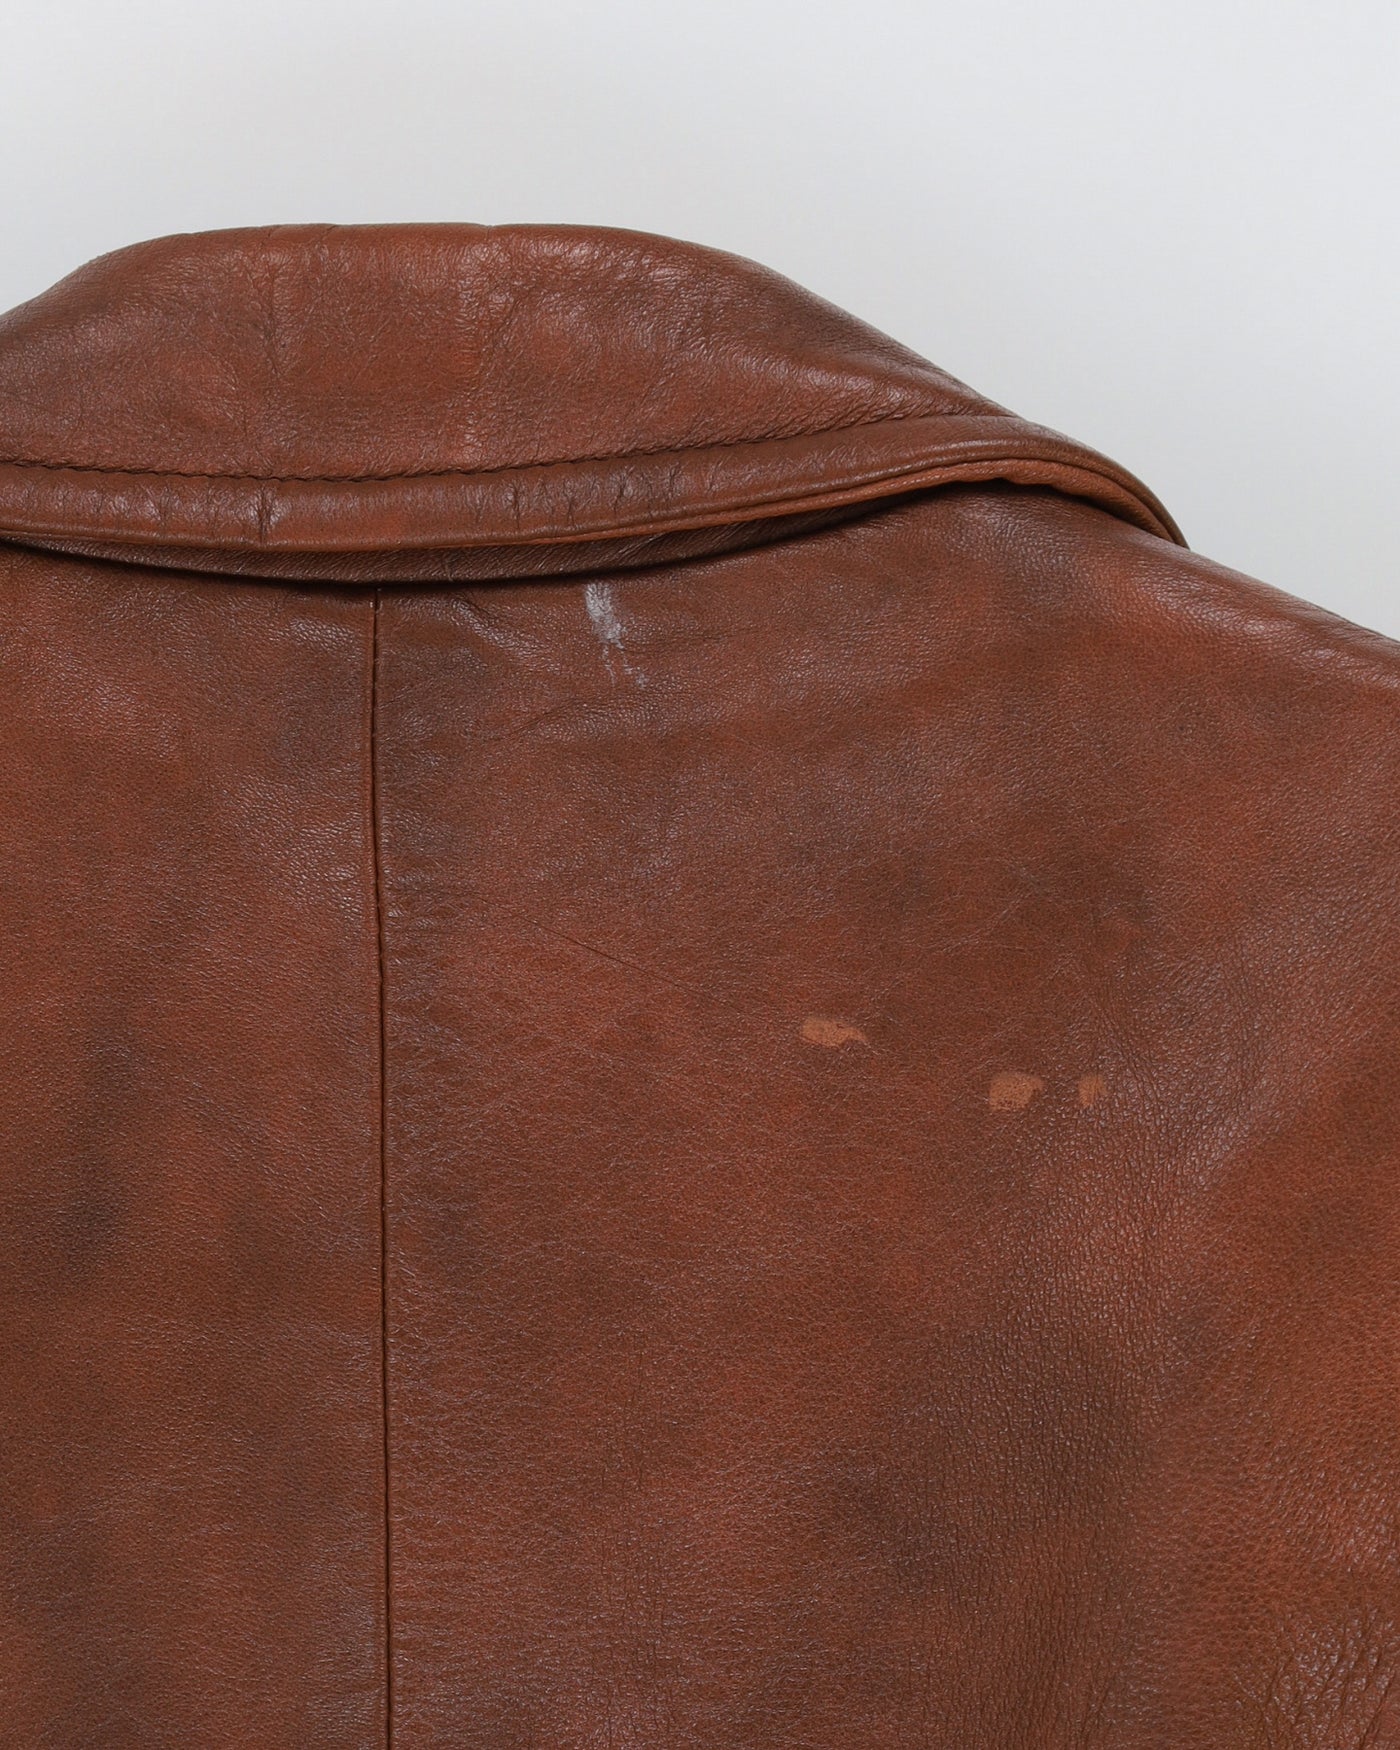 Vintage 1970s Brown Leather Jacket - S